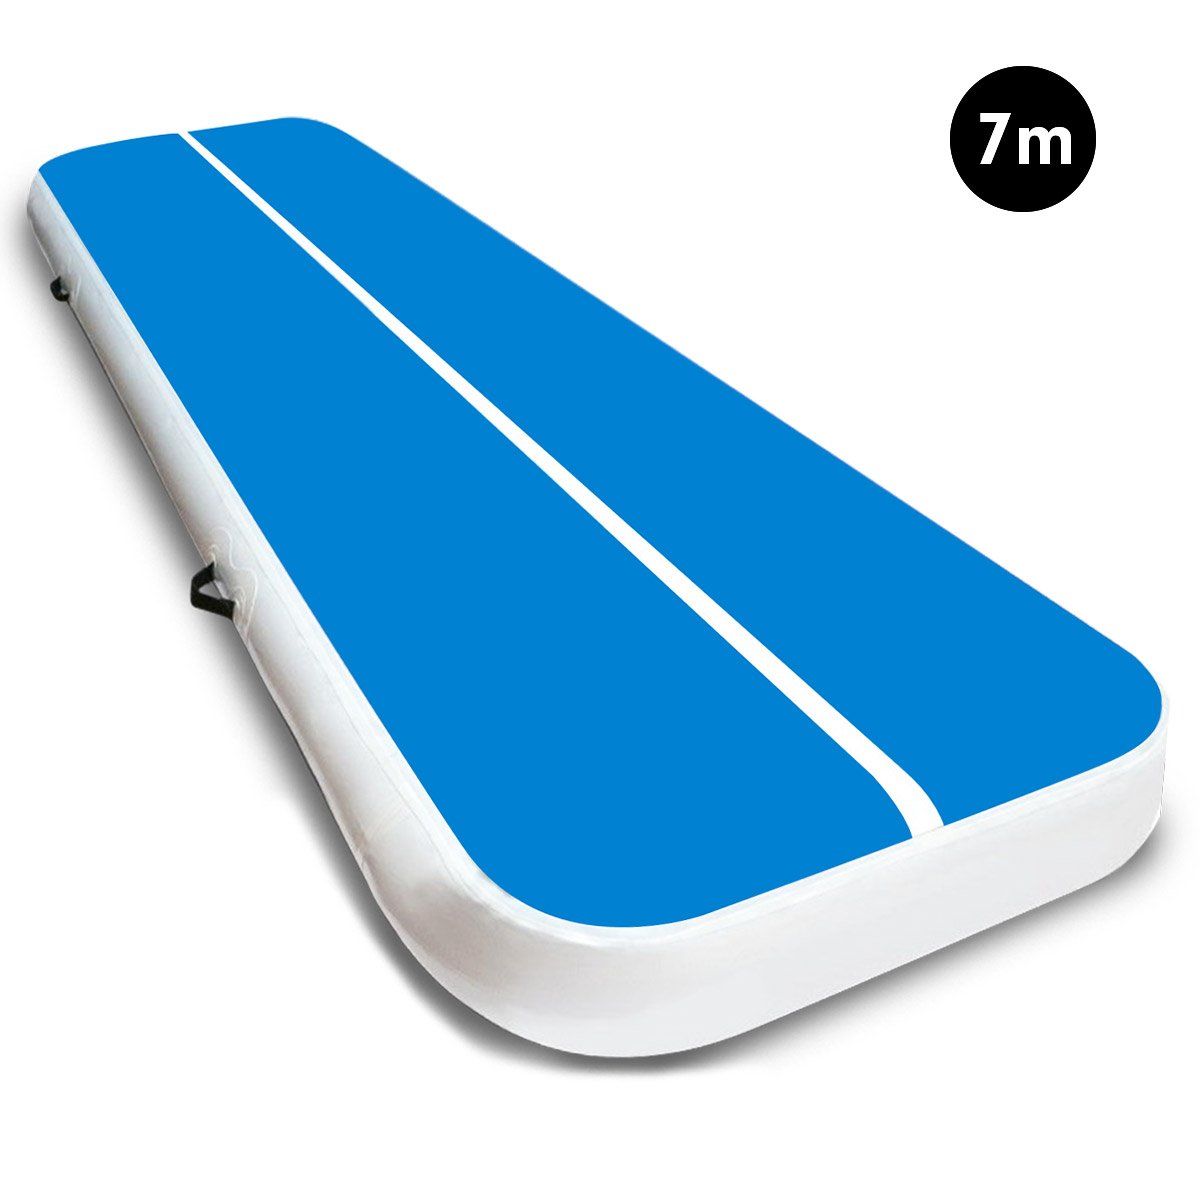 7m x 1m Air Track Inflatable Tumbling Gymnastics Mat - Blue White 2